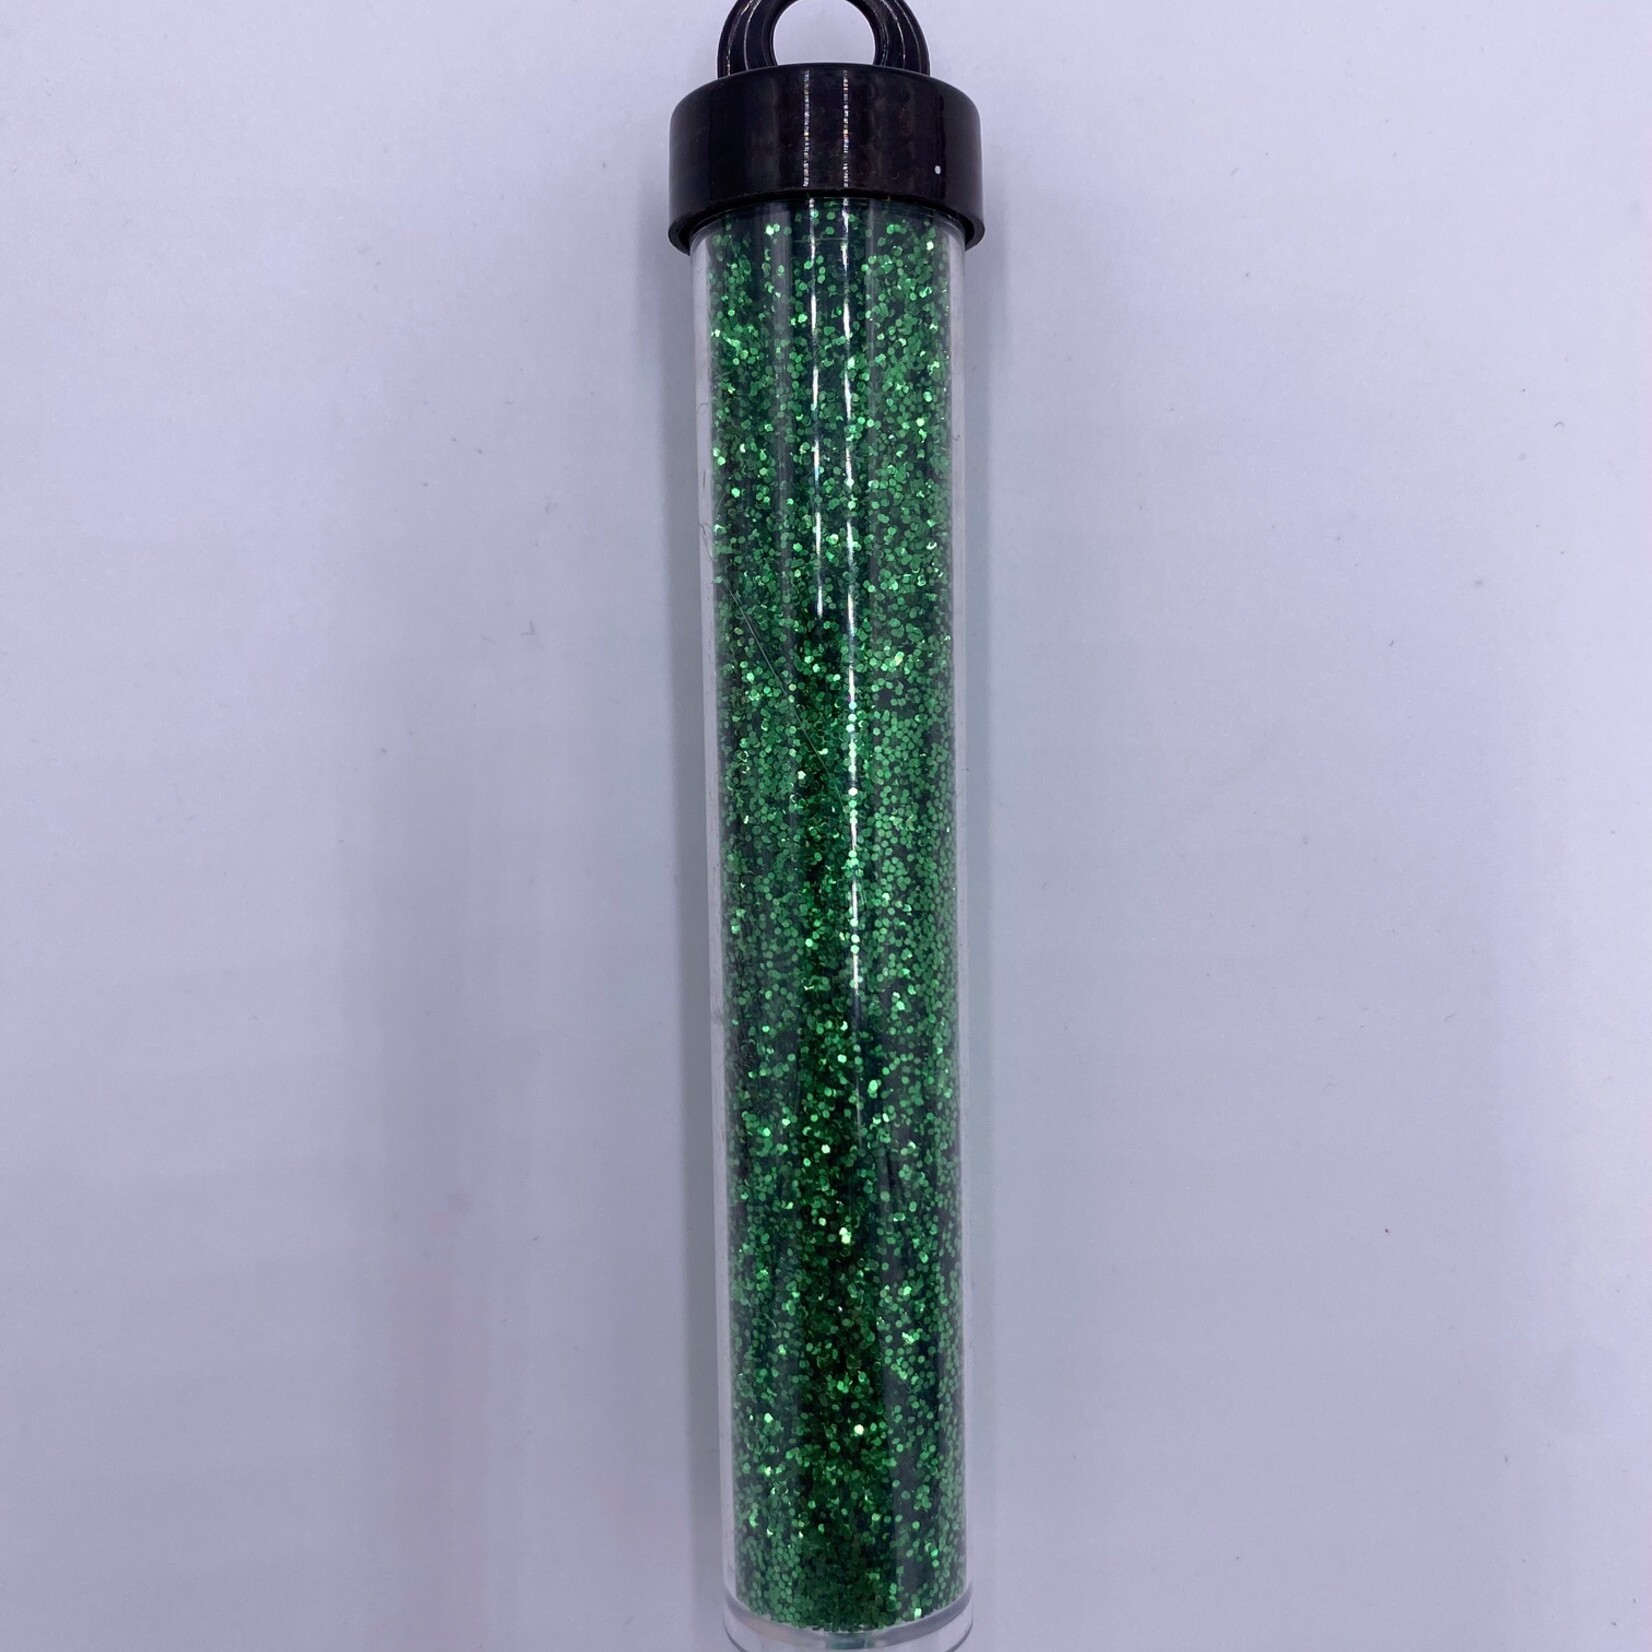 Glitter Tubes 0.77oz / 22g - Samaroo's Limited